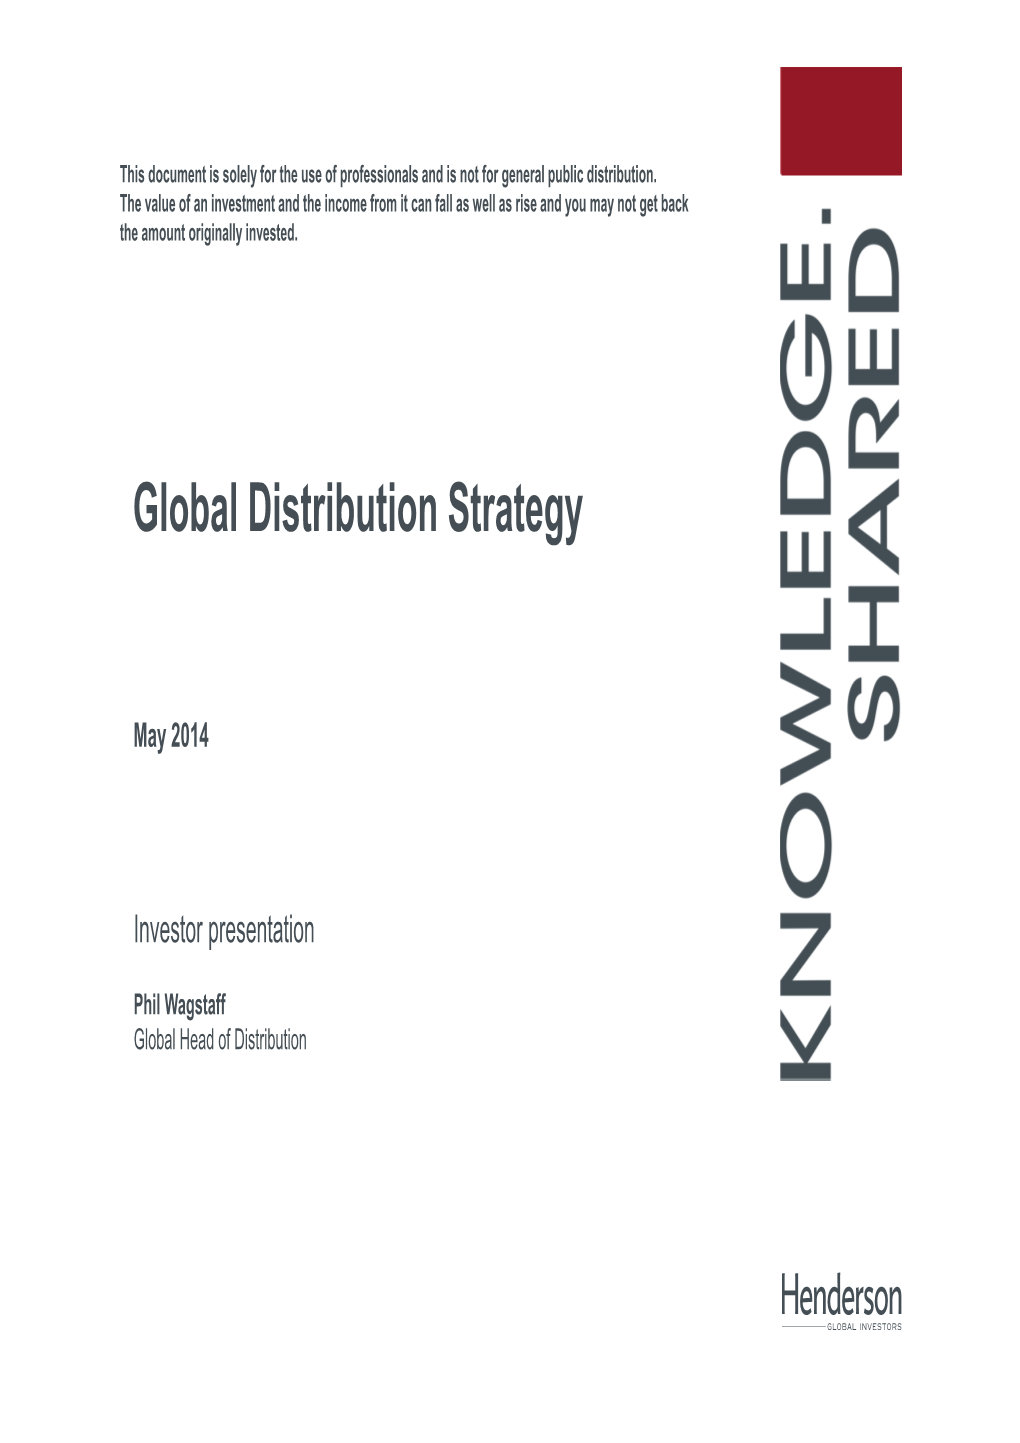 Global Distribution Strategy